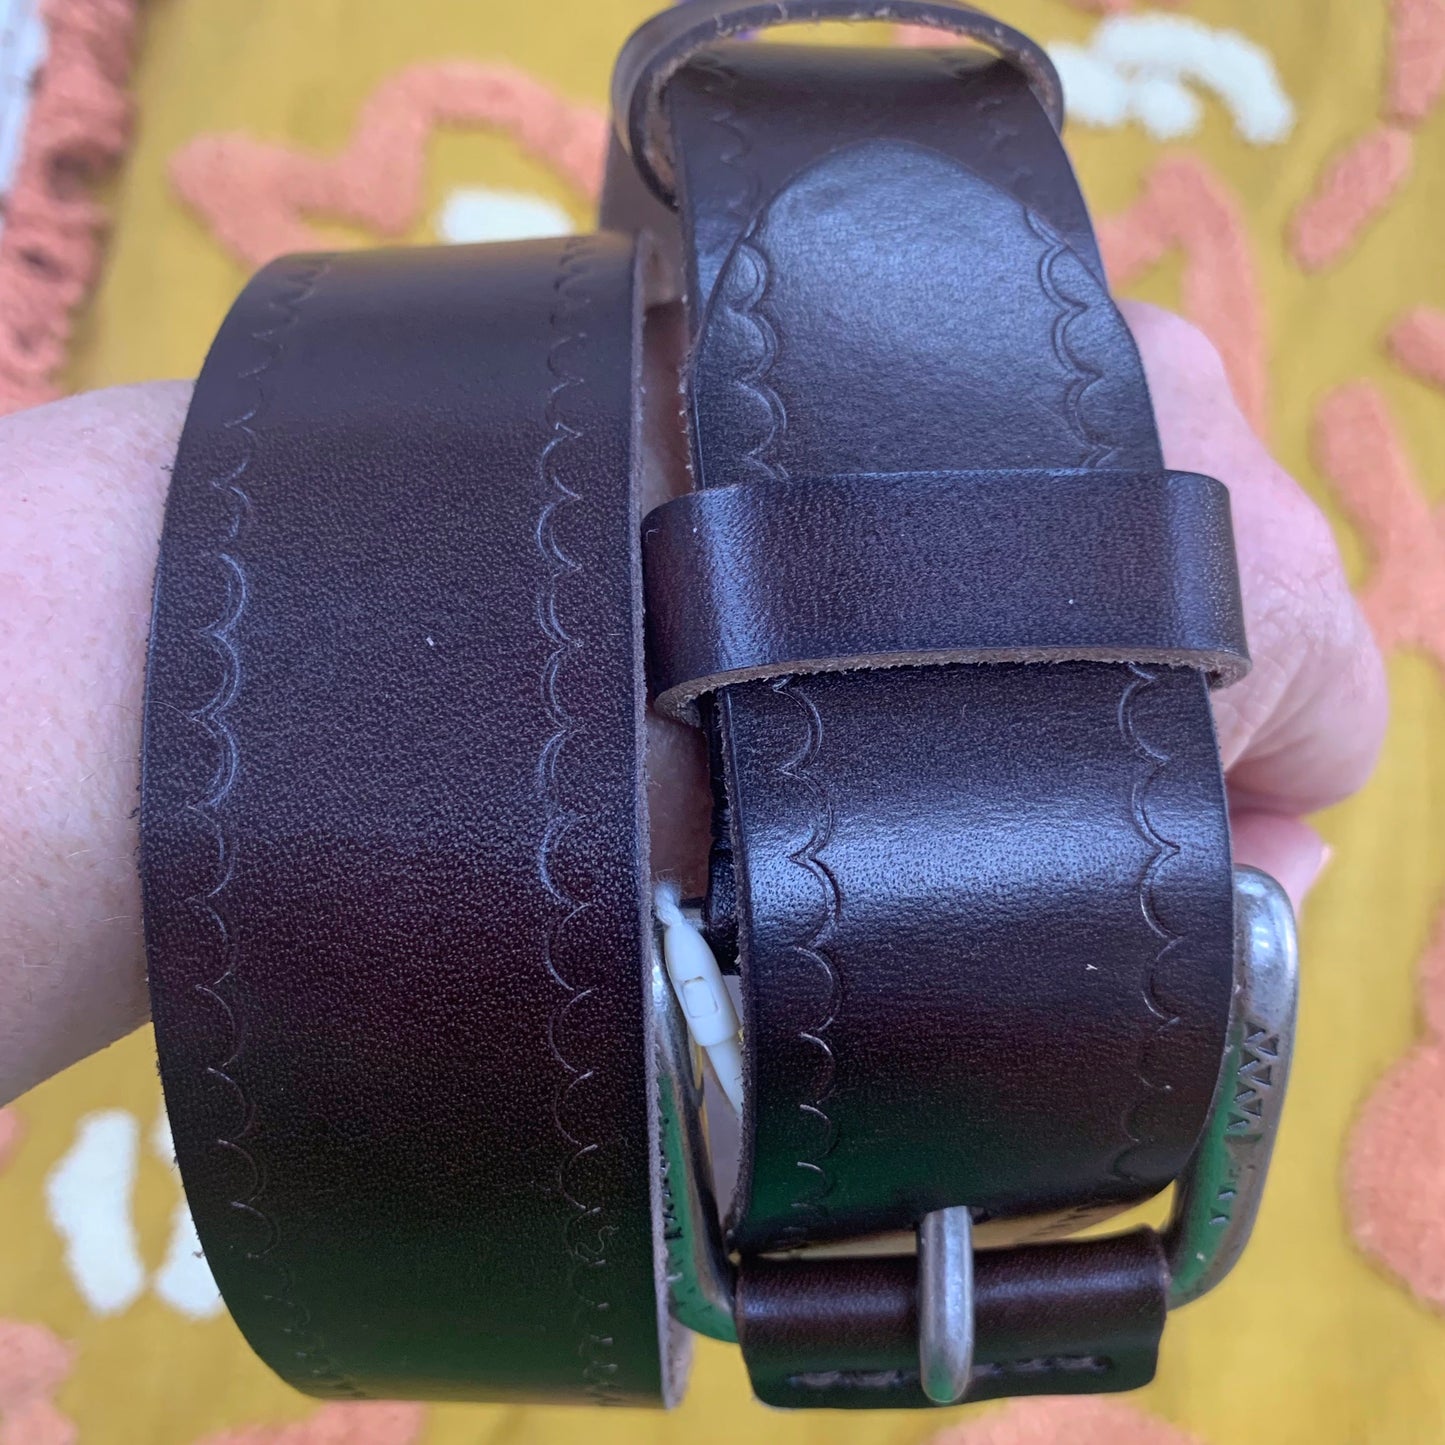 Utilitaire Vintage Chocolate Leather Belt